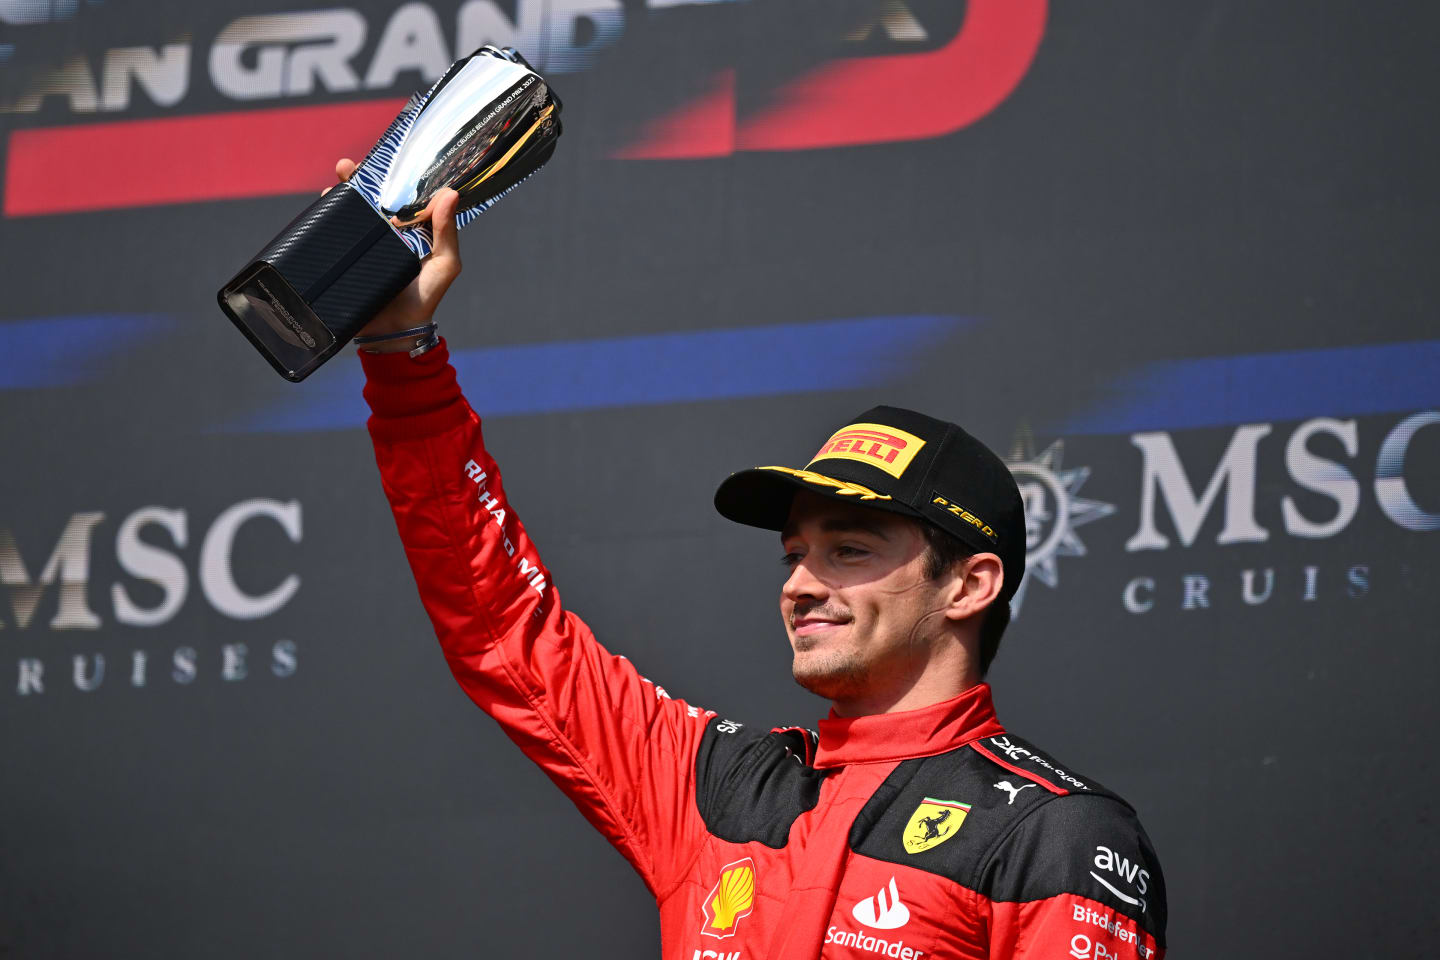 SPA, BELGIUM - JULY 30: Third placed Charles Leclerc of Monaco and Ferrari celebrates on the podium